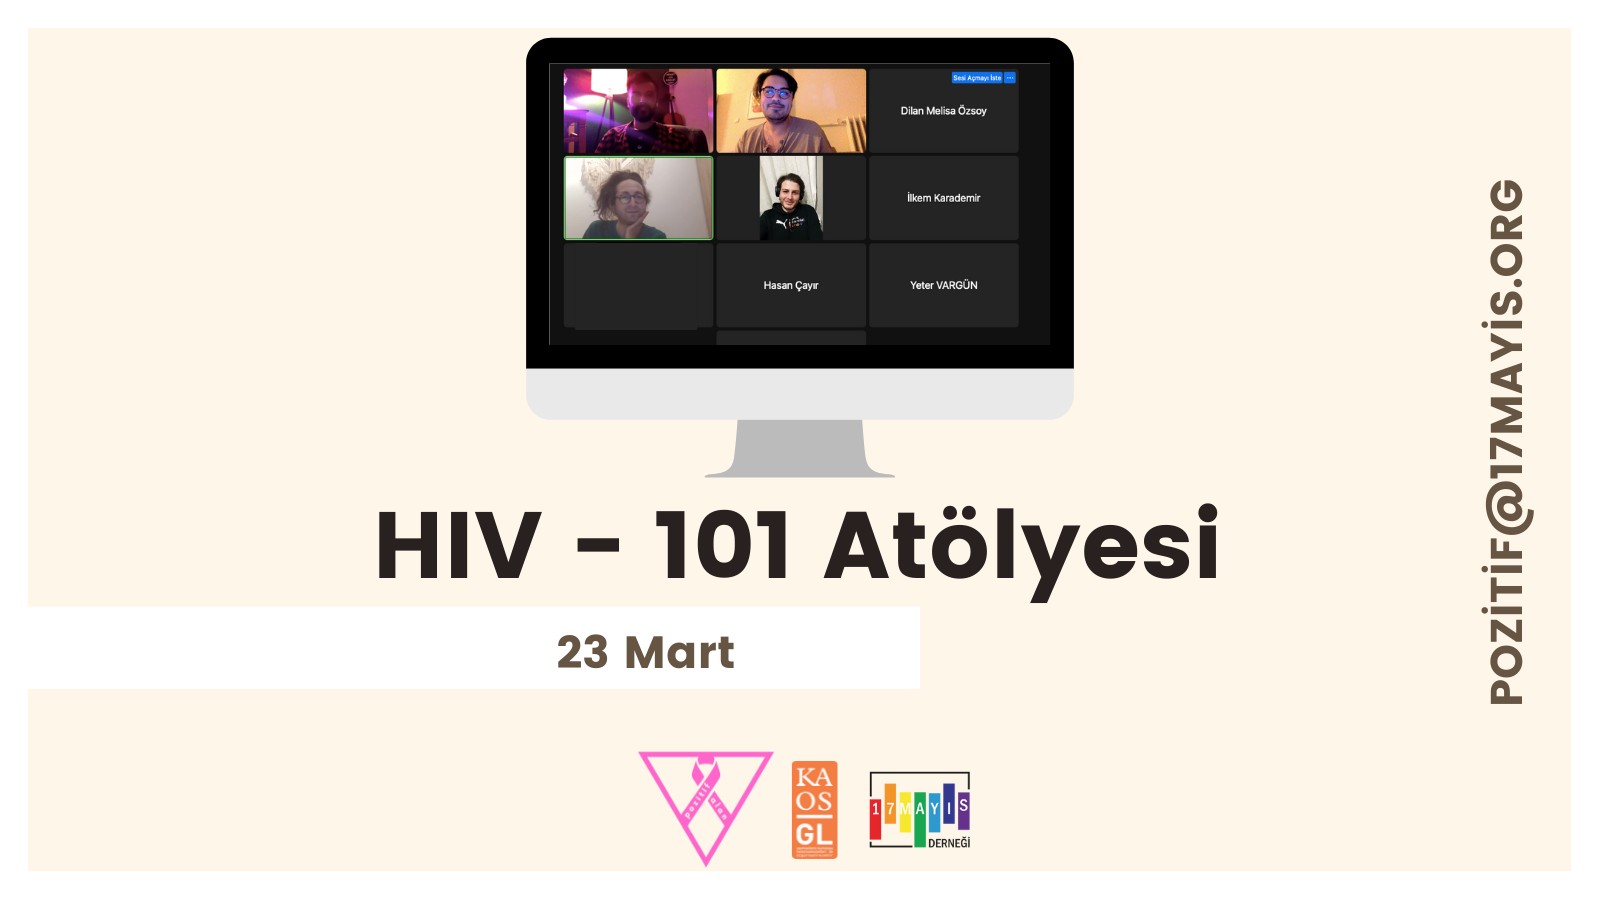 HIV 101 Atölyesi 23 Mart'ta Tamamlandı! - 17 Mayıs